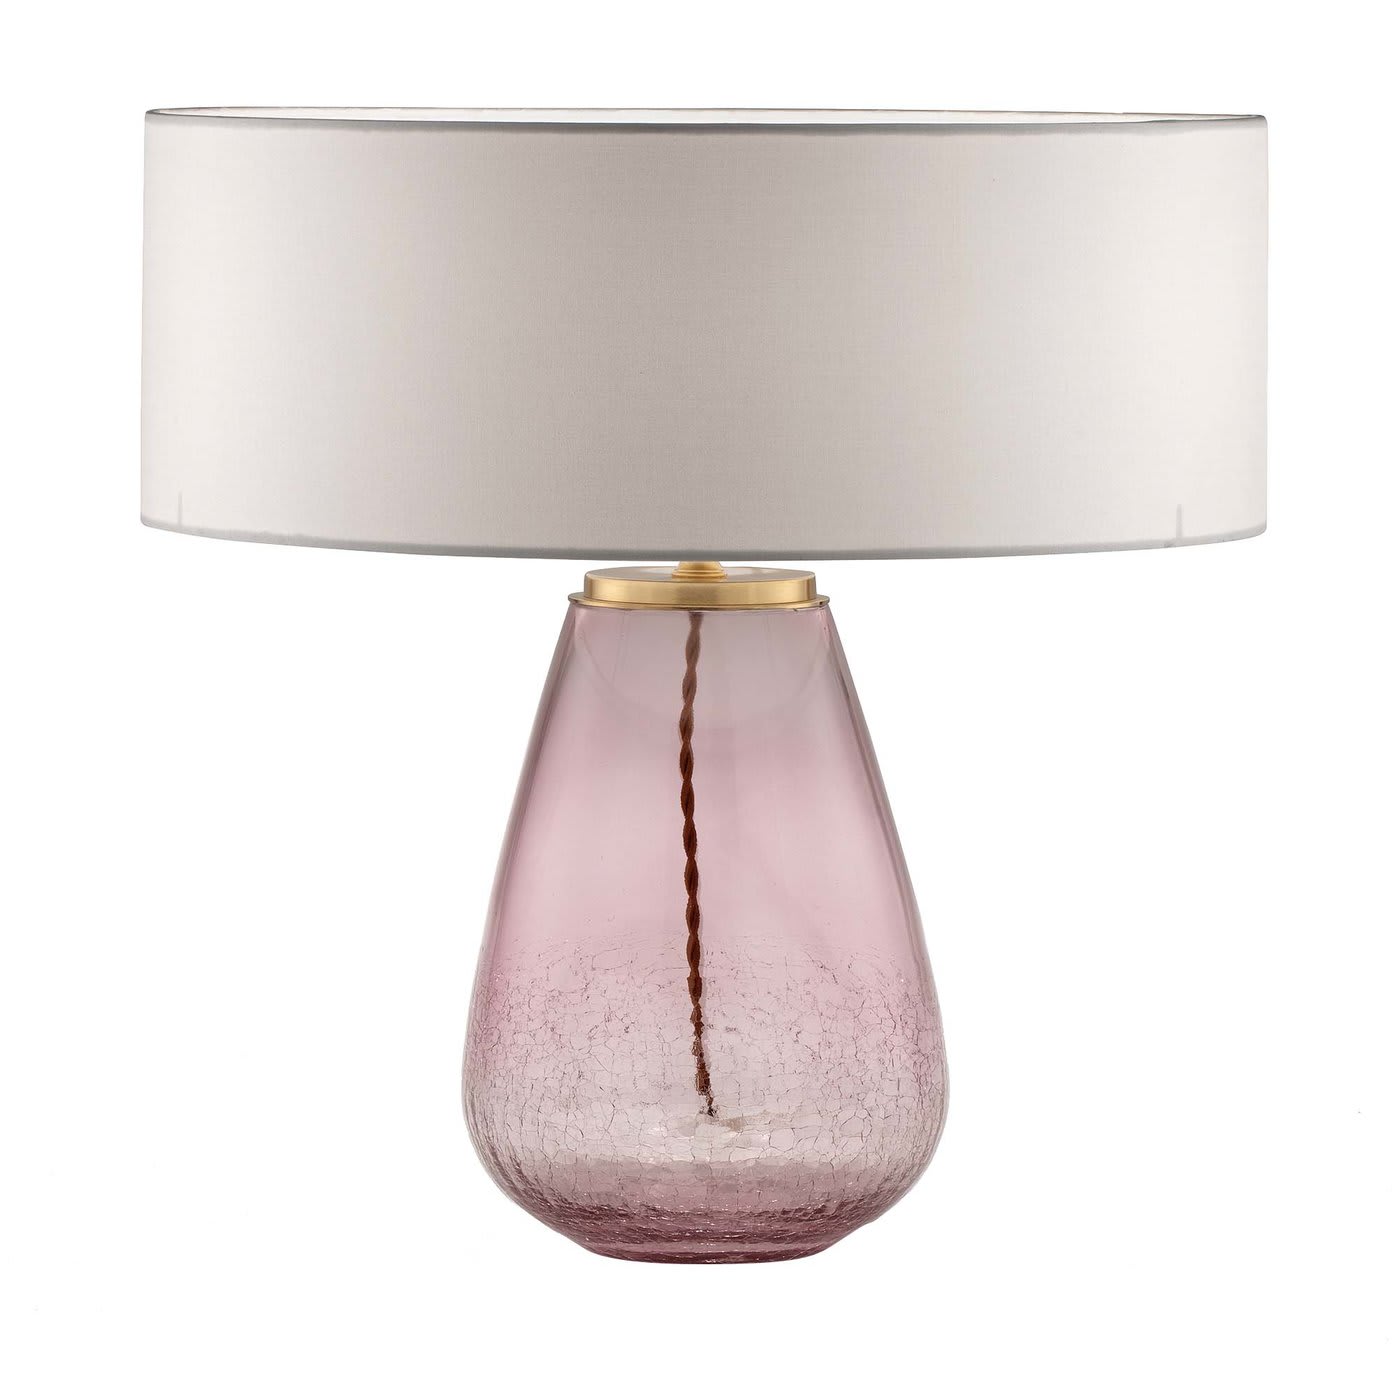 Grace LG1 Table Lamp - Euroluce Light of Italy